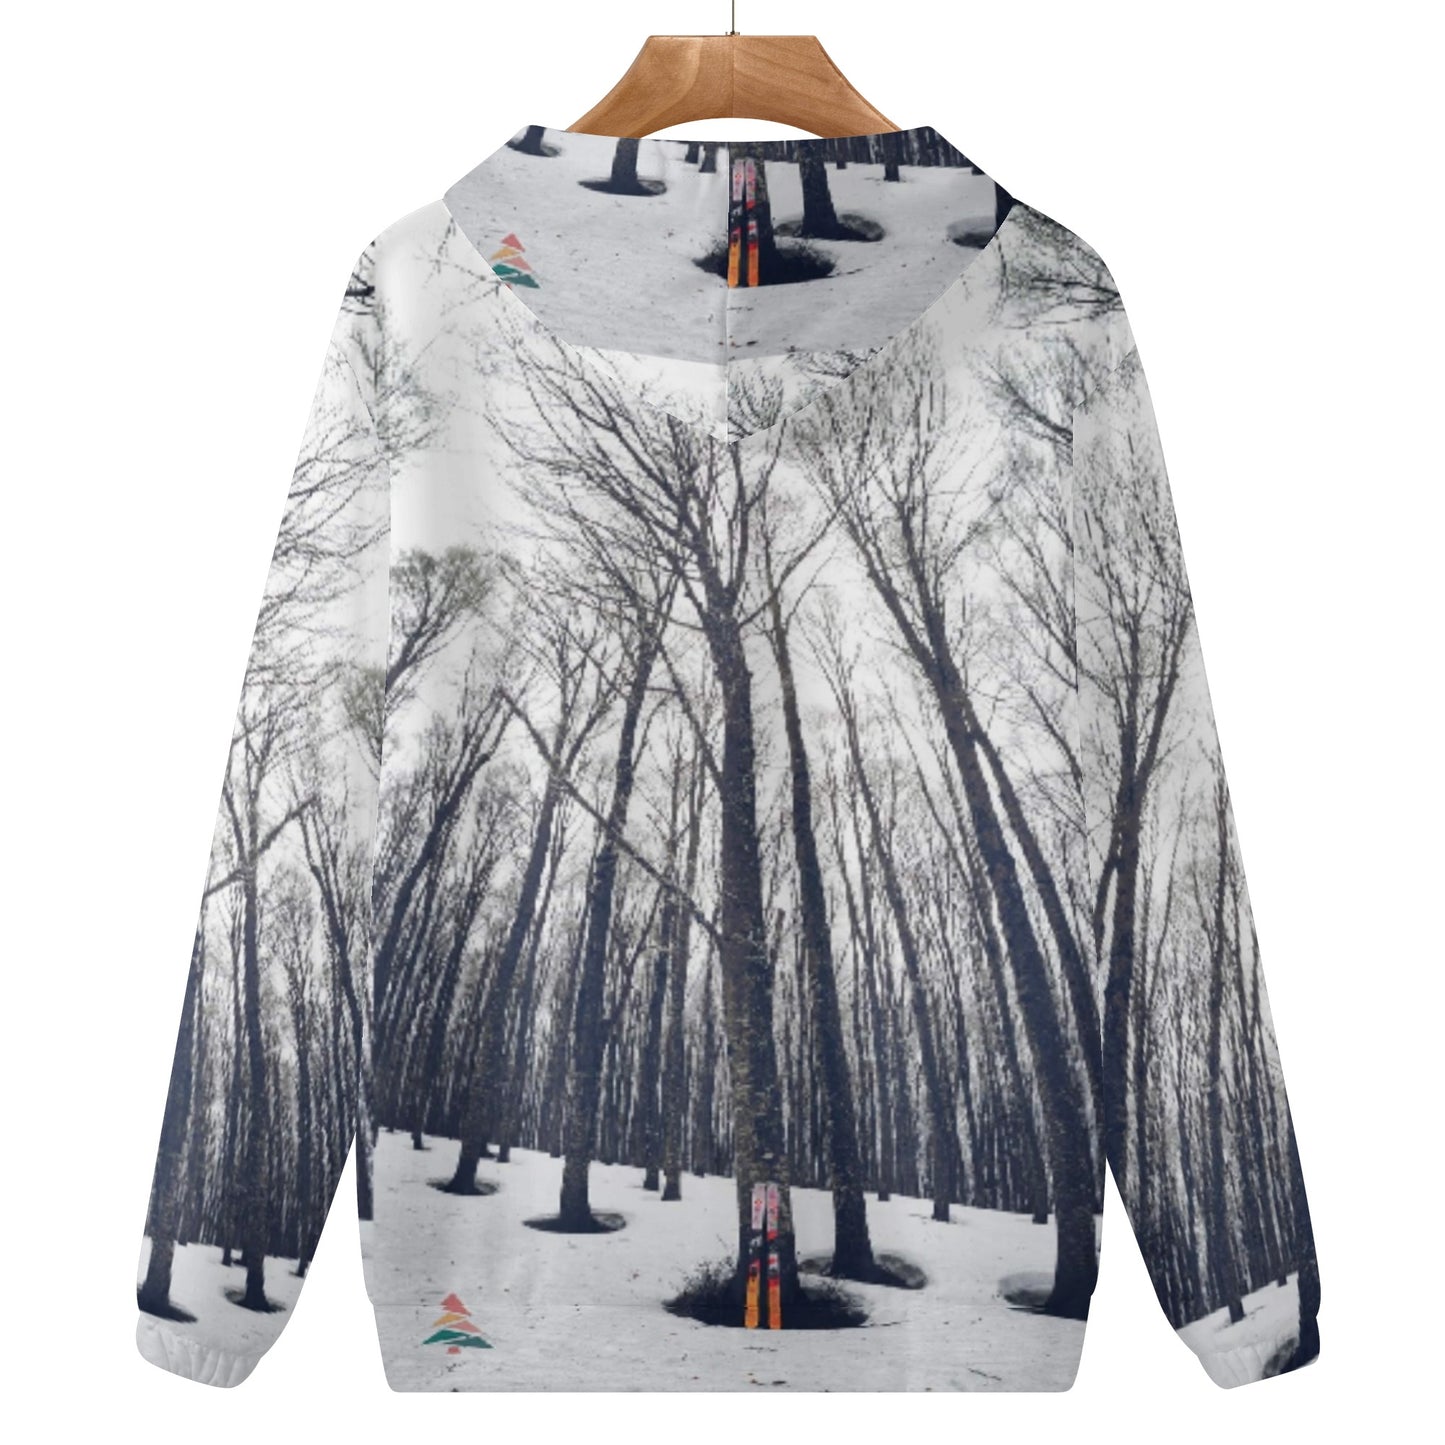 Pure Nature Project Bosco Maiella Mens Lightweight All Over Printing Hoodie Sweatshirt